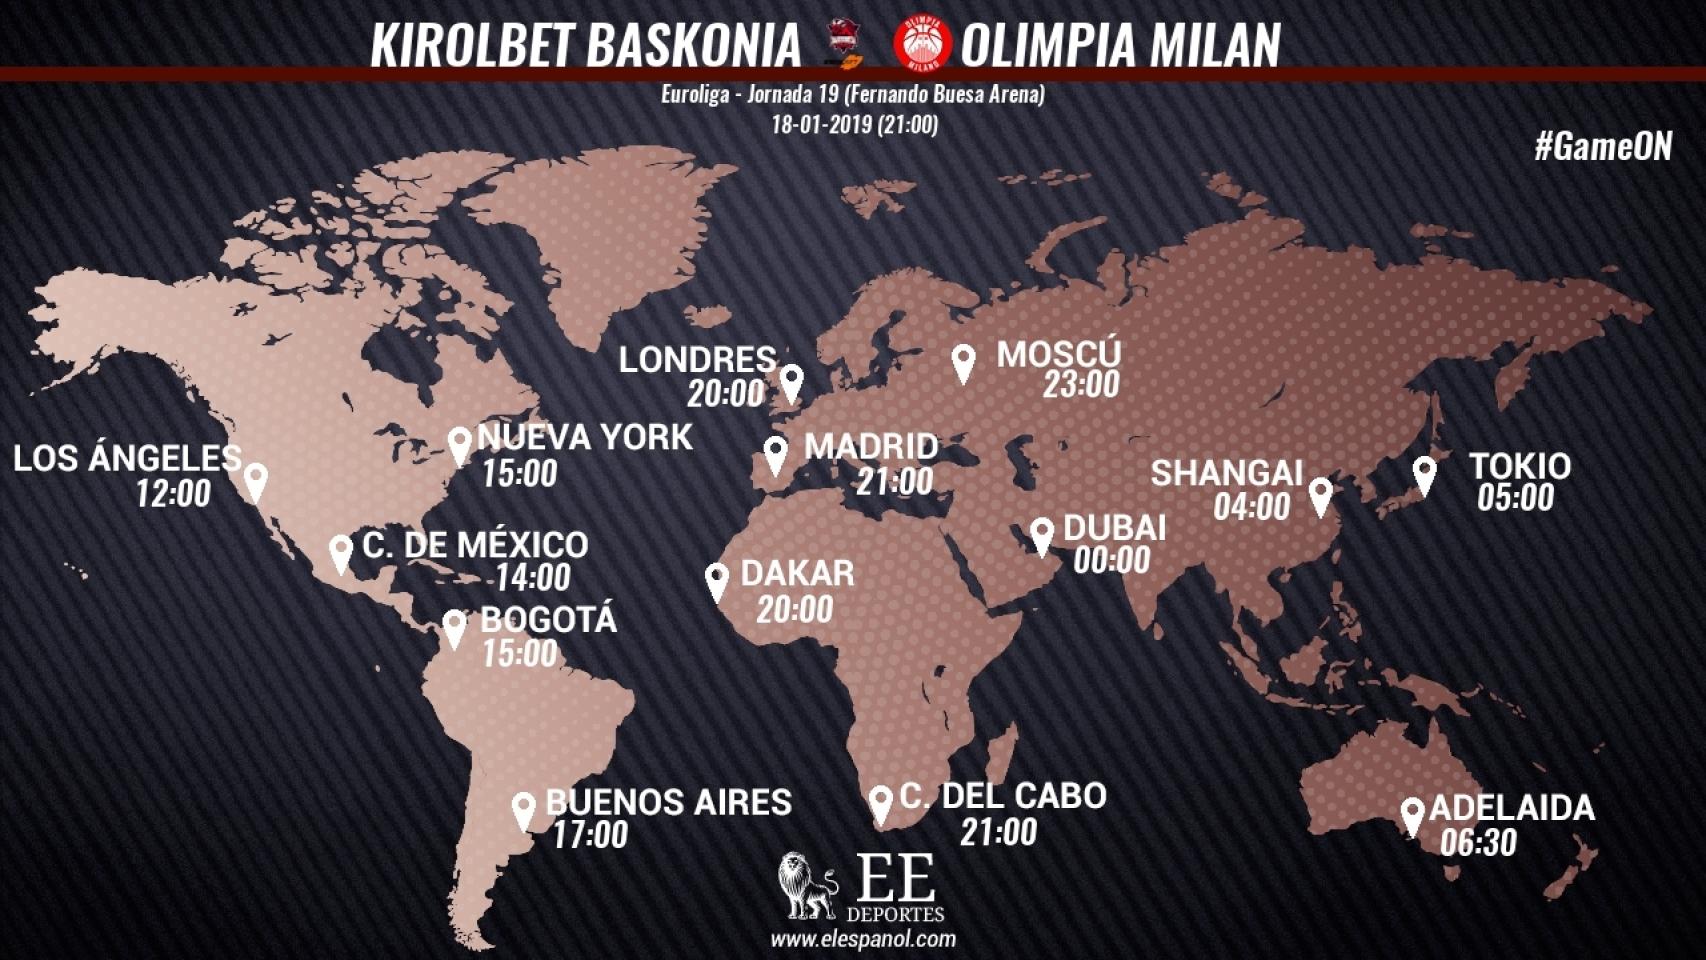 Horario del Kirolbet Baskonia - Olimpia Milan